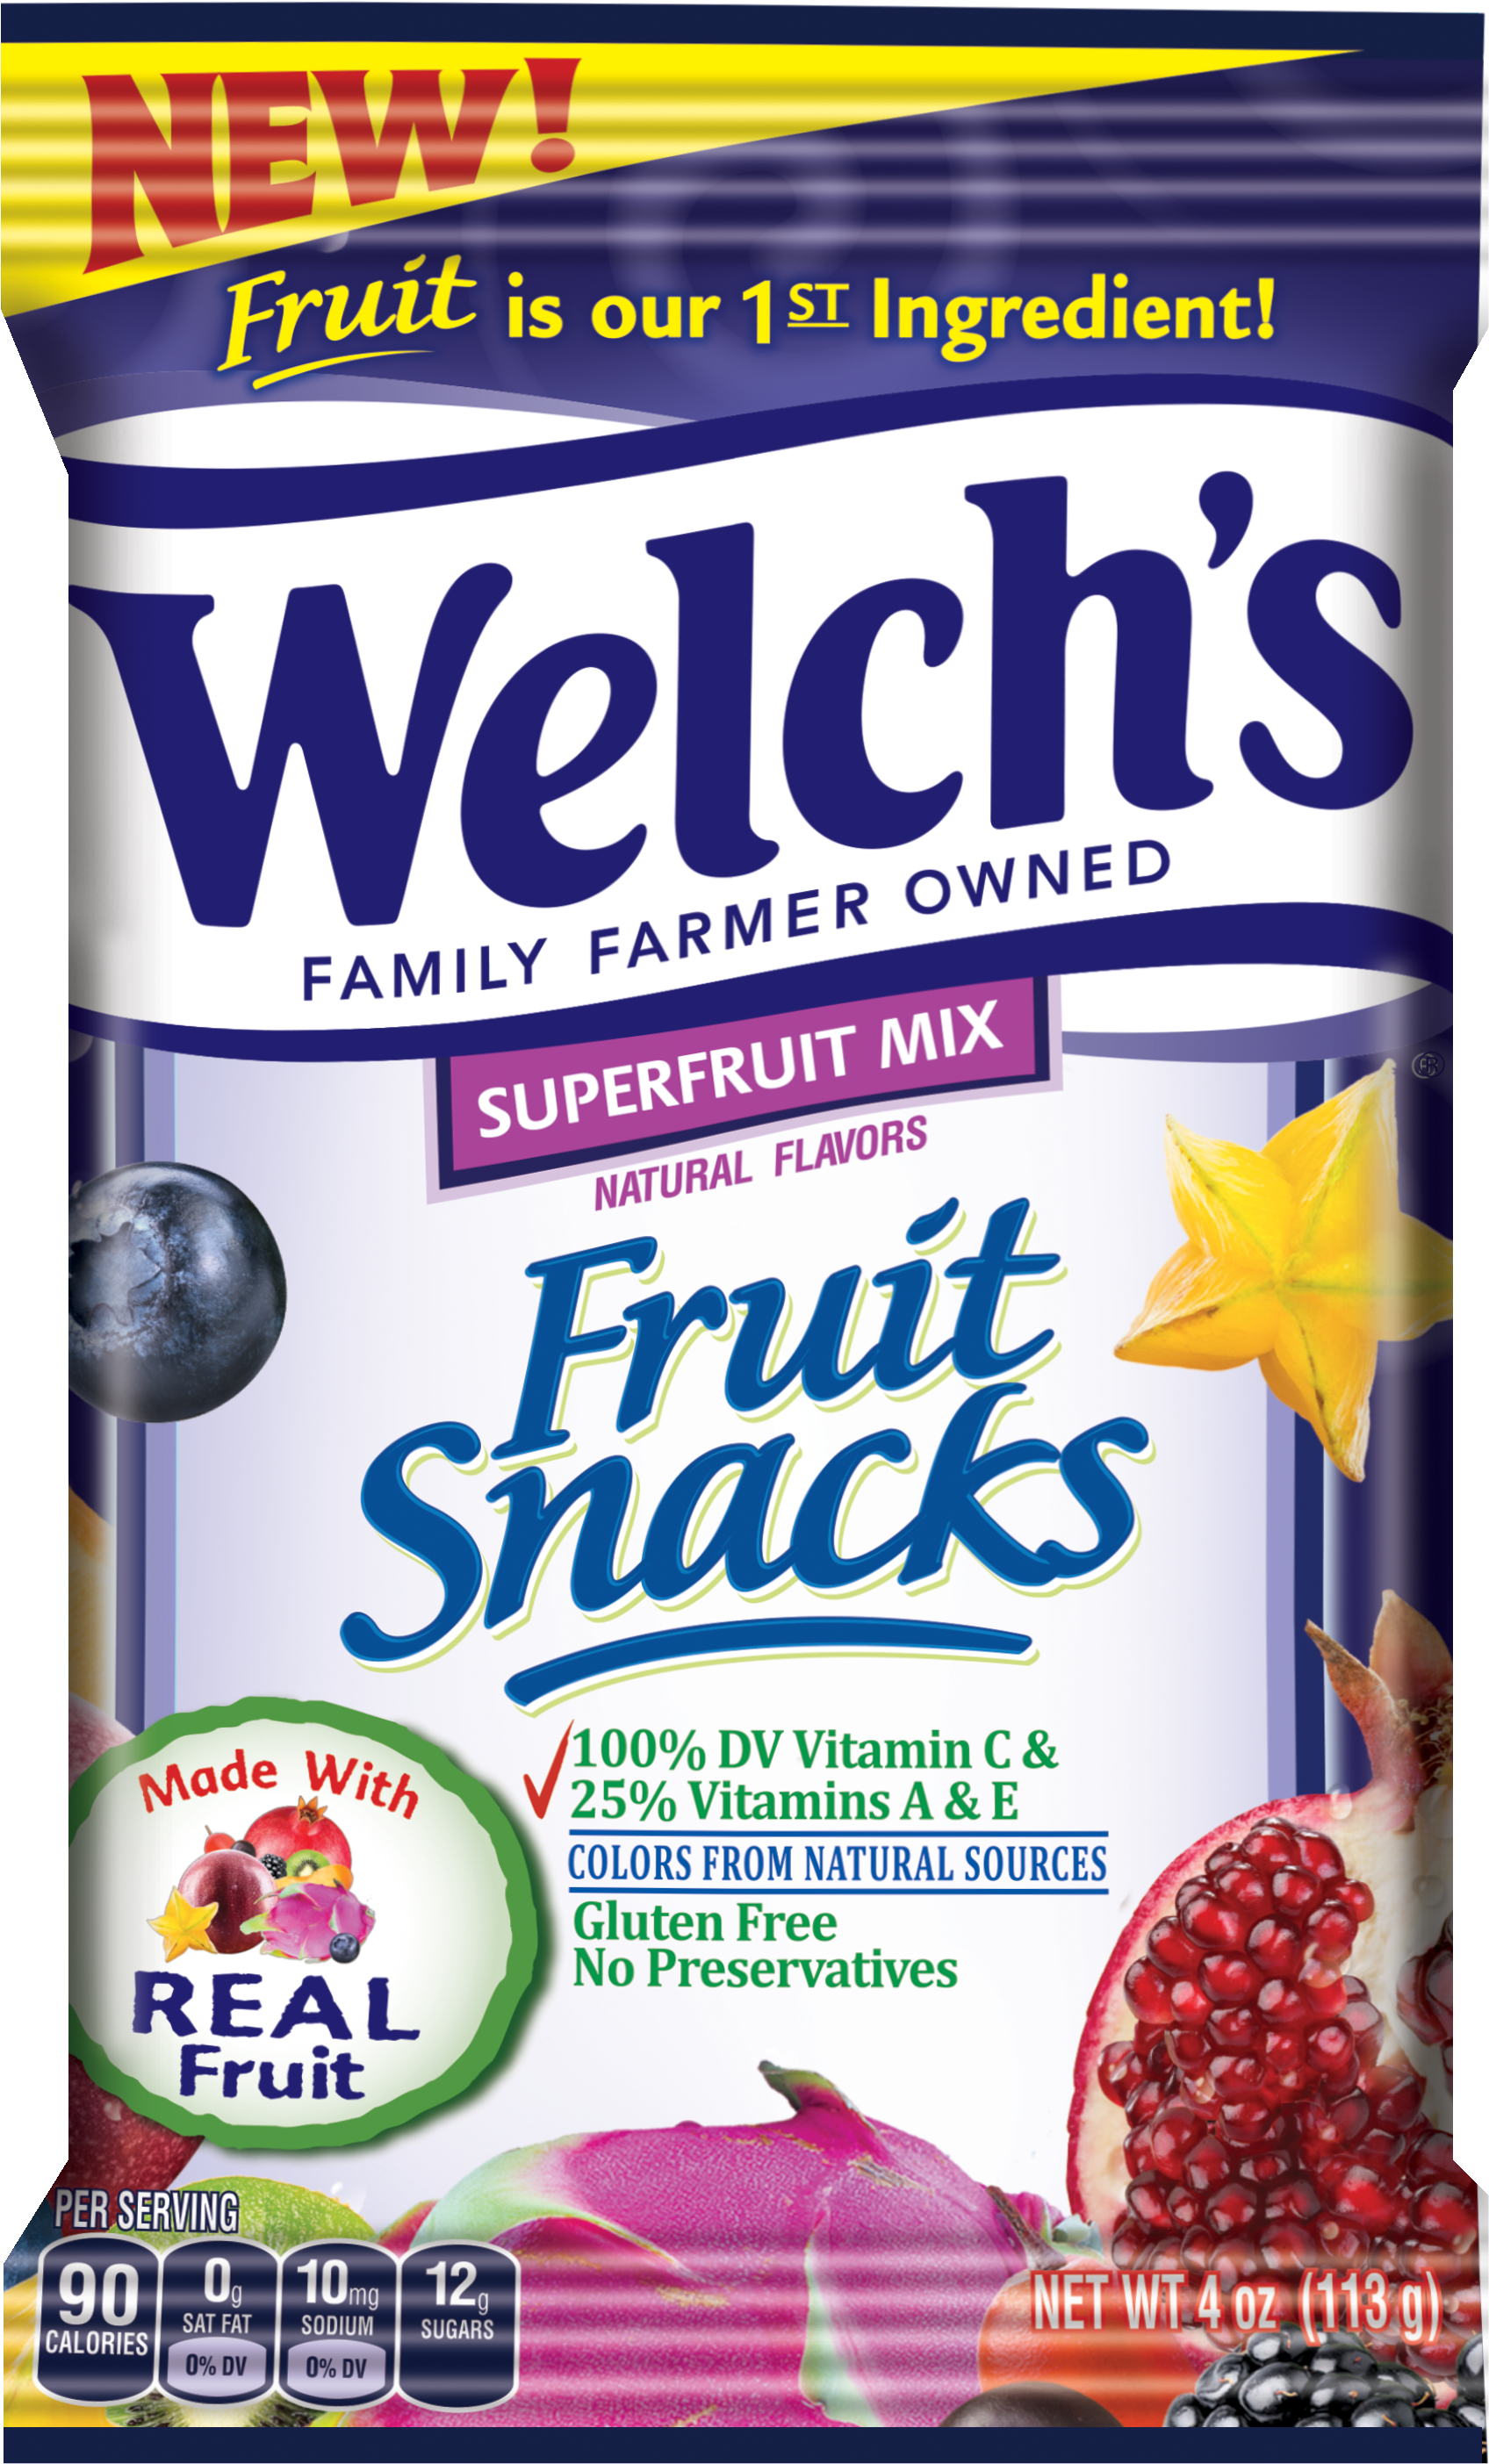 Welchs Superfruit Mix Fruit Snacks Package